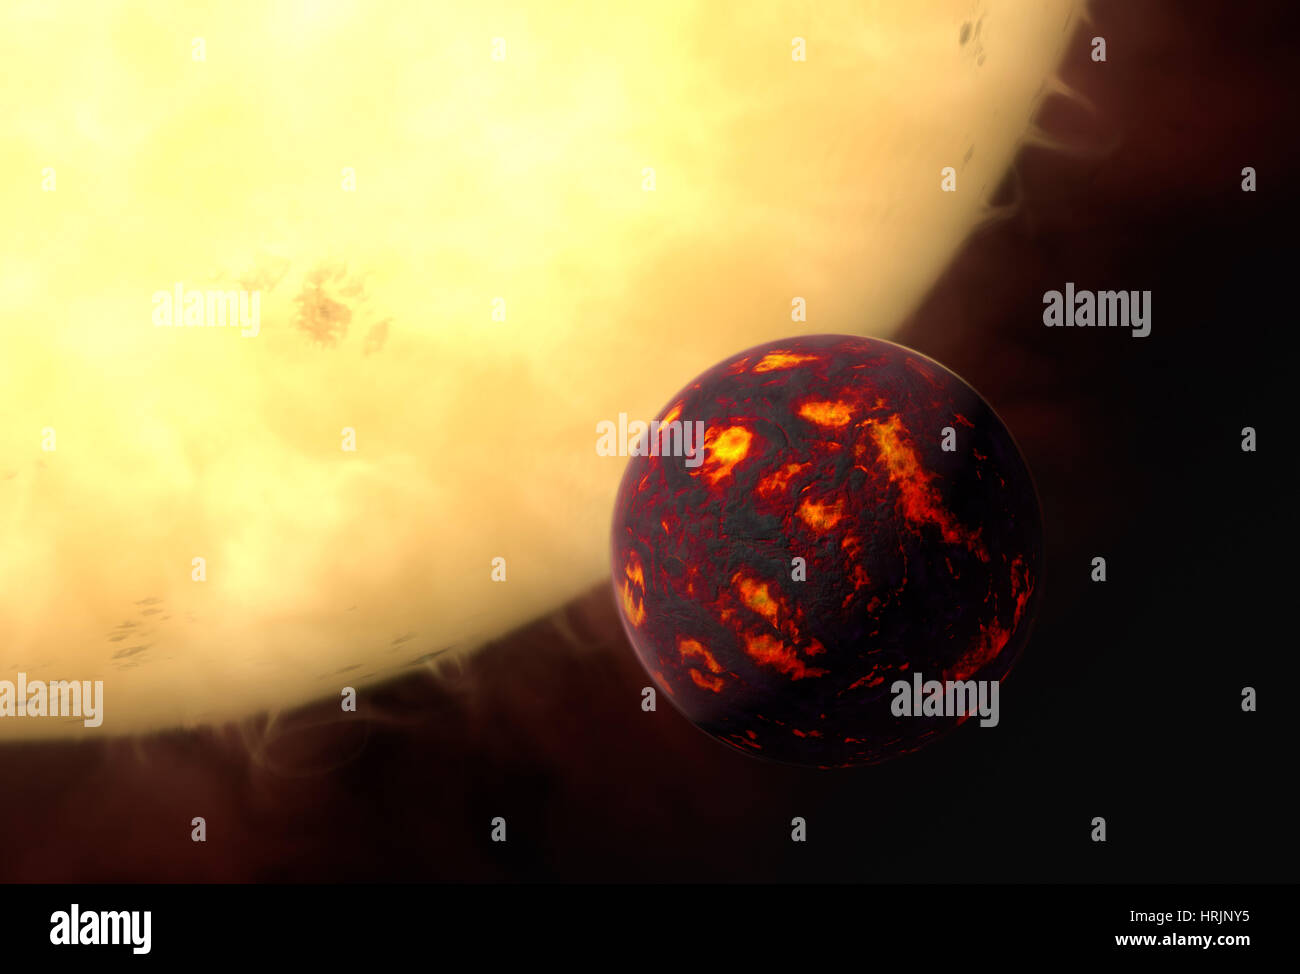 Exoplanet 55 Cancri e Stock Photo